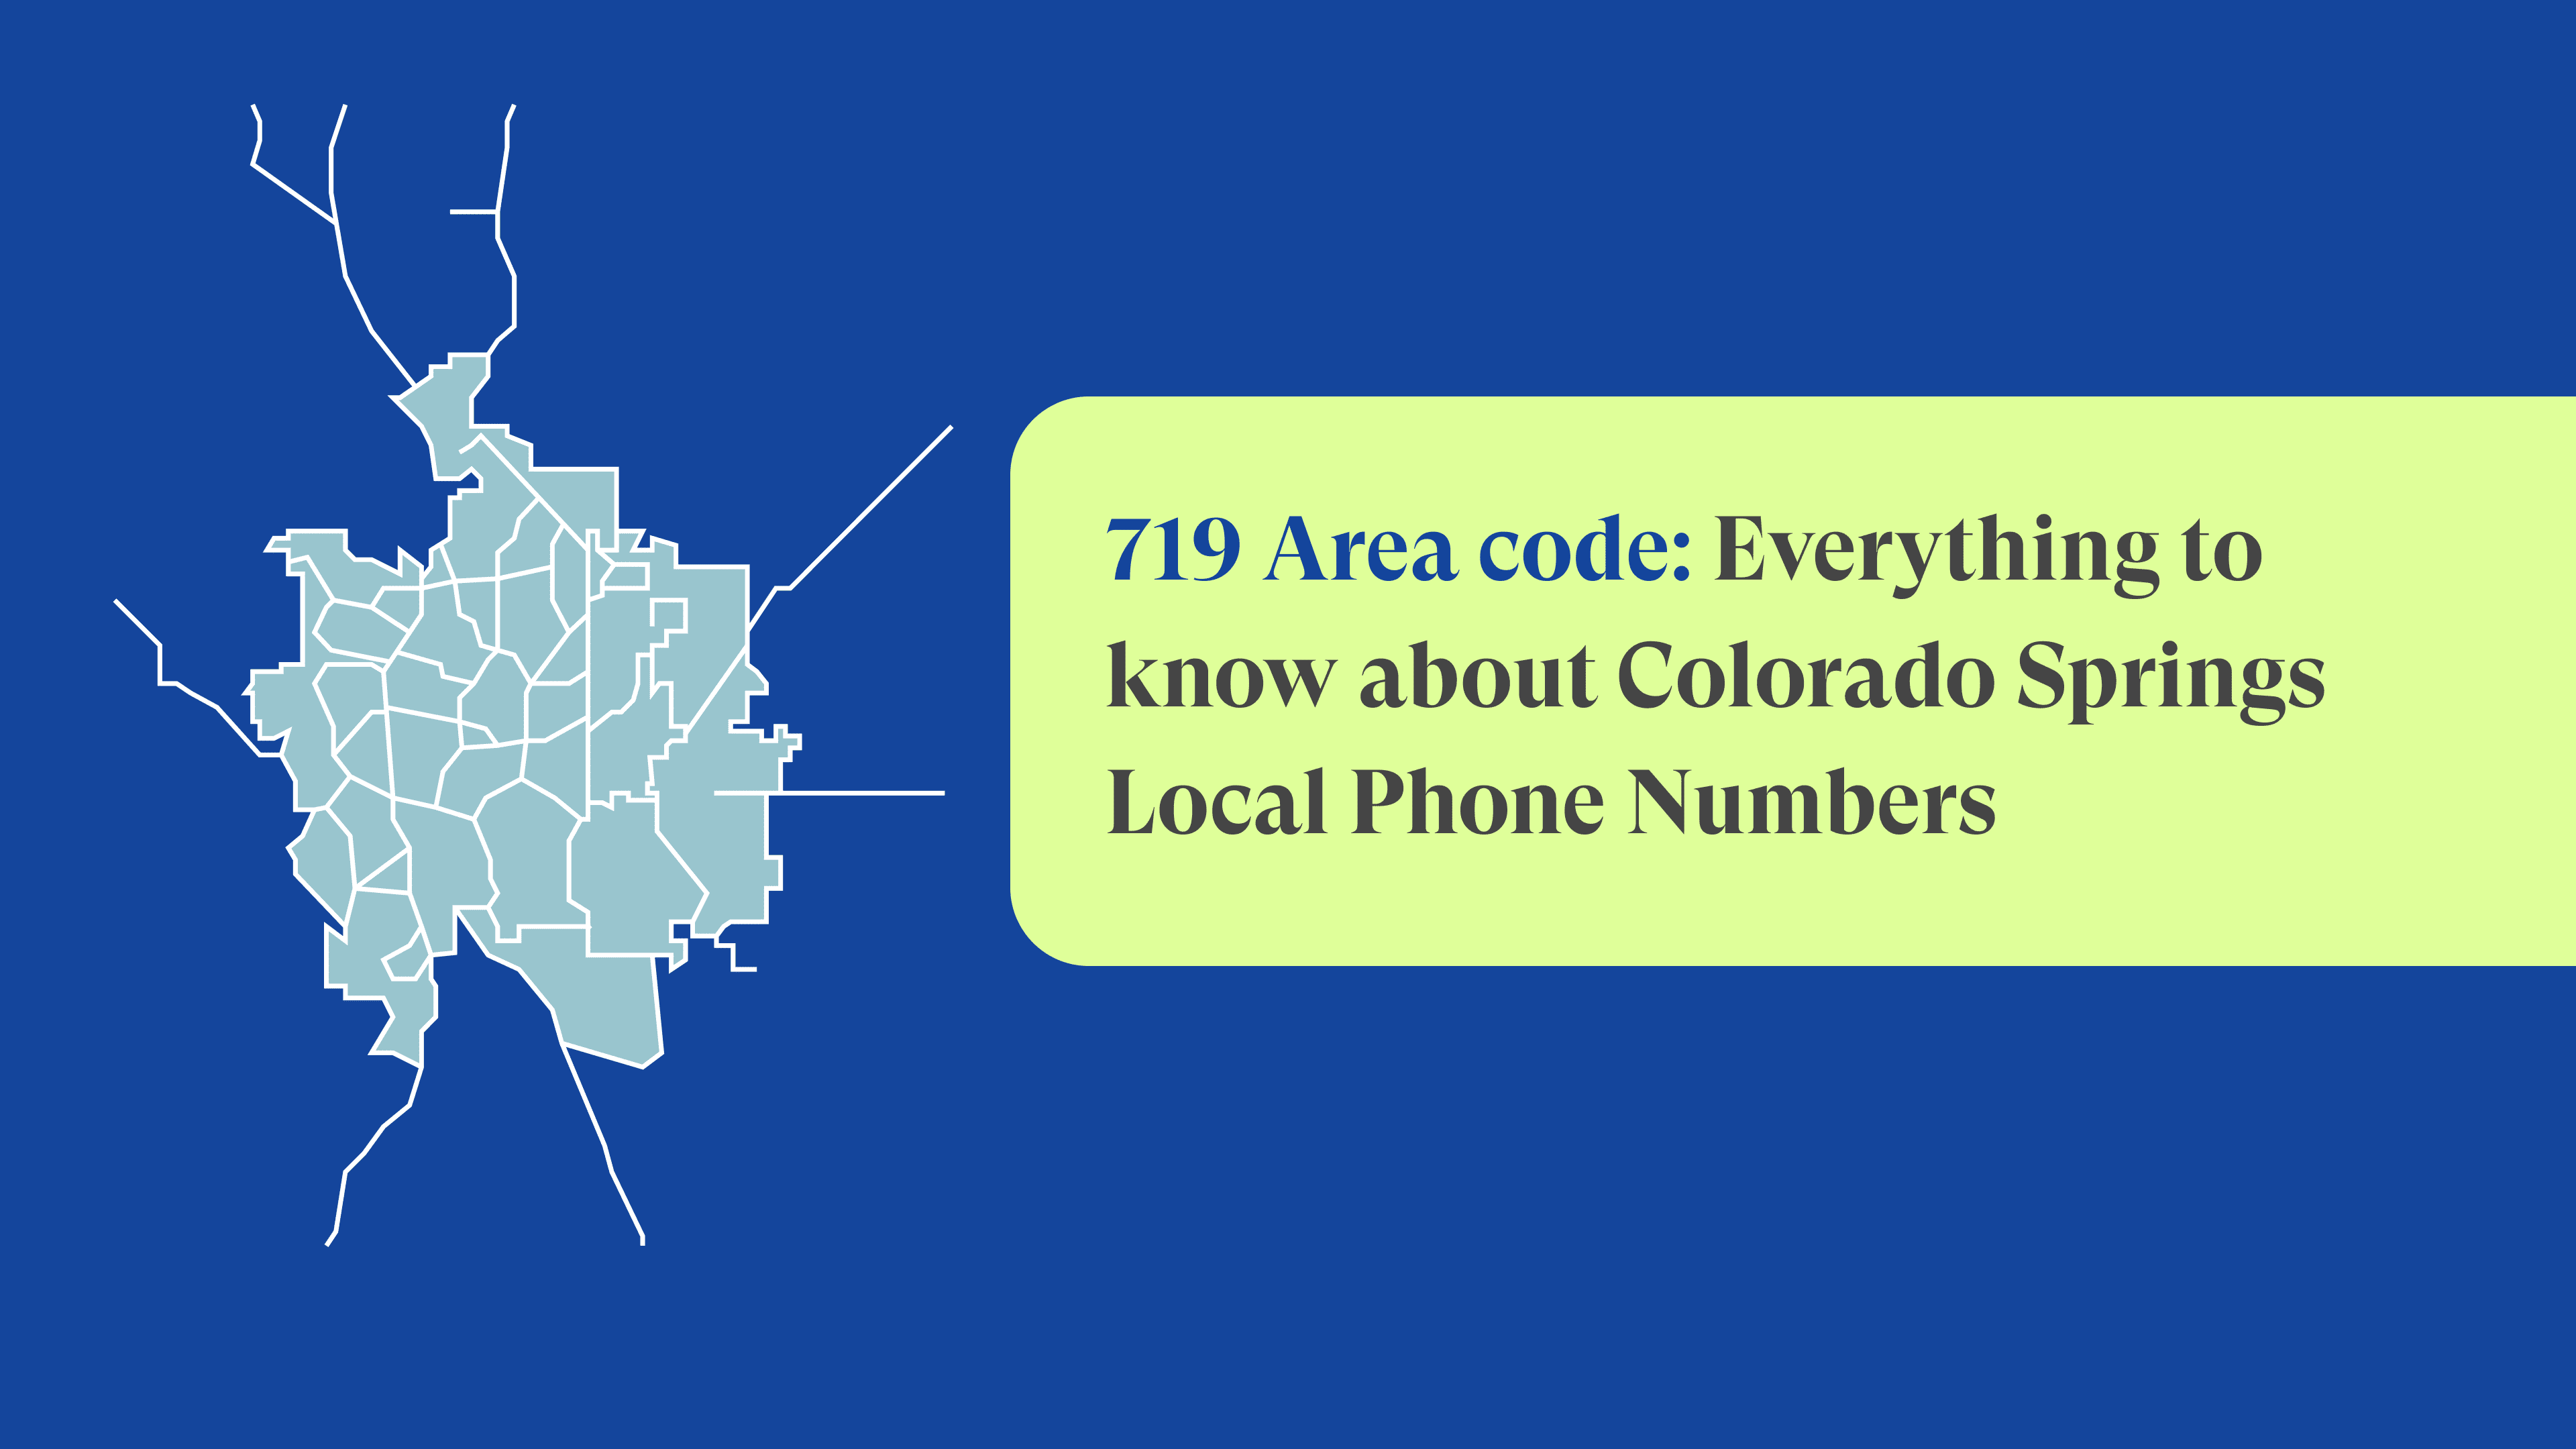 Area Code 719: Colorado Springs Local Phone Numbers